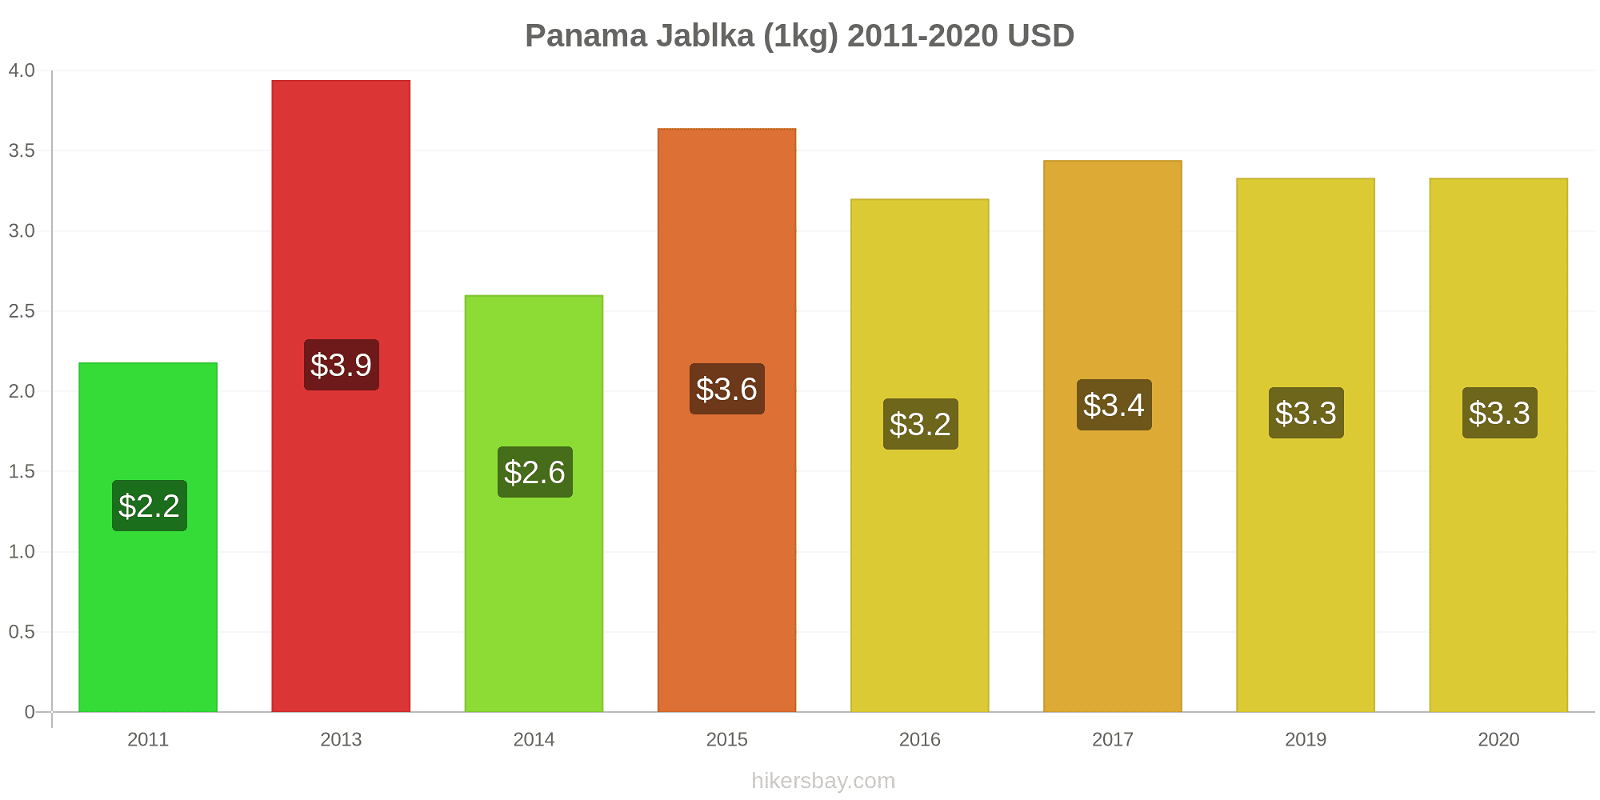 Panama změny cen Jablka (1kg) hikersbay.com